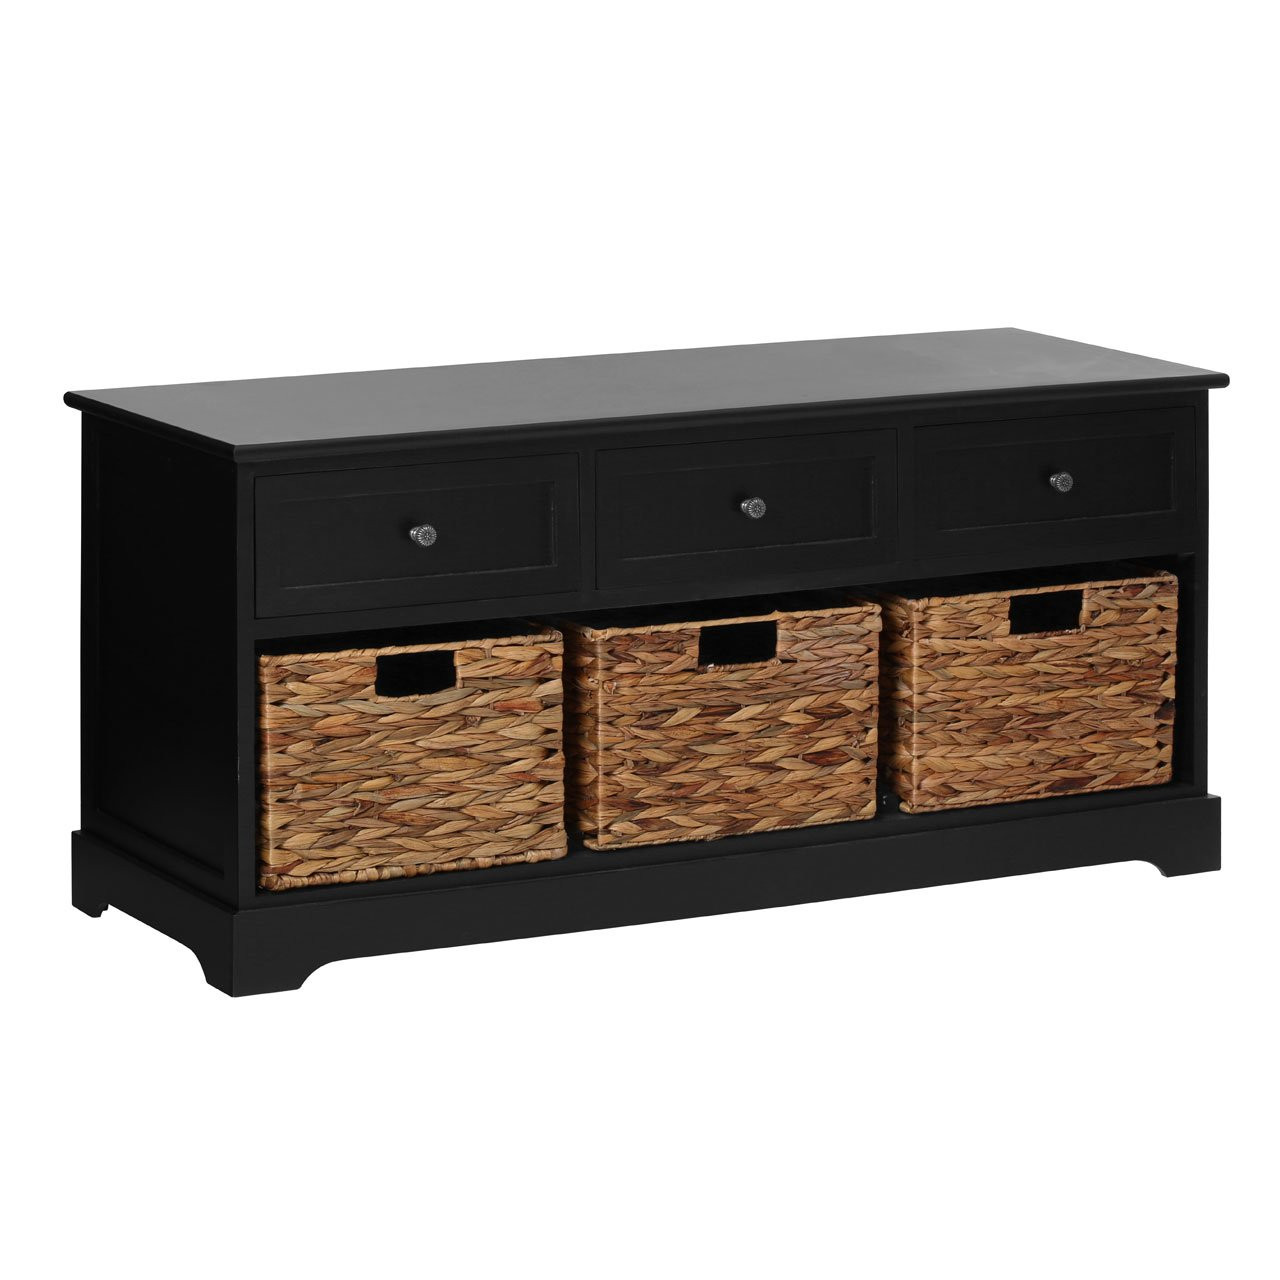 Wood Storage Bench With Drawers
 Storage Bench With Drawers And Baskets White Bench With